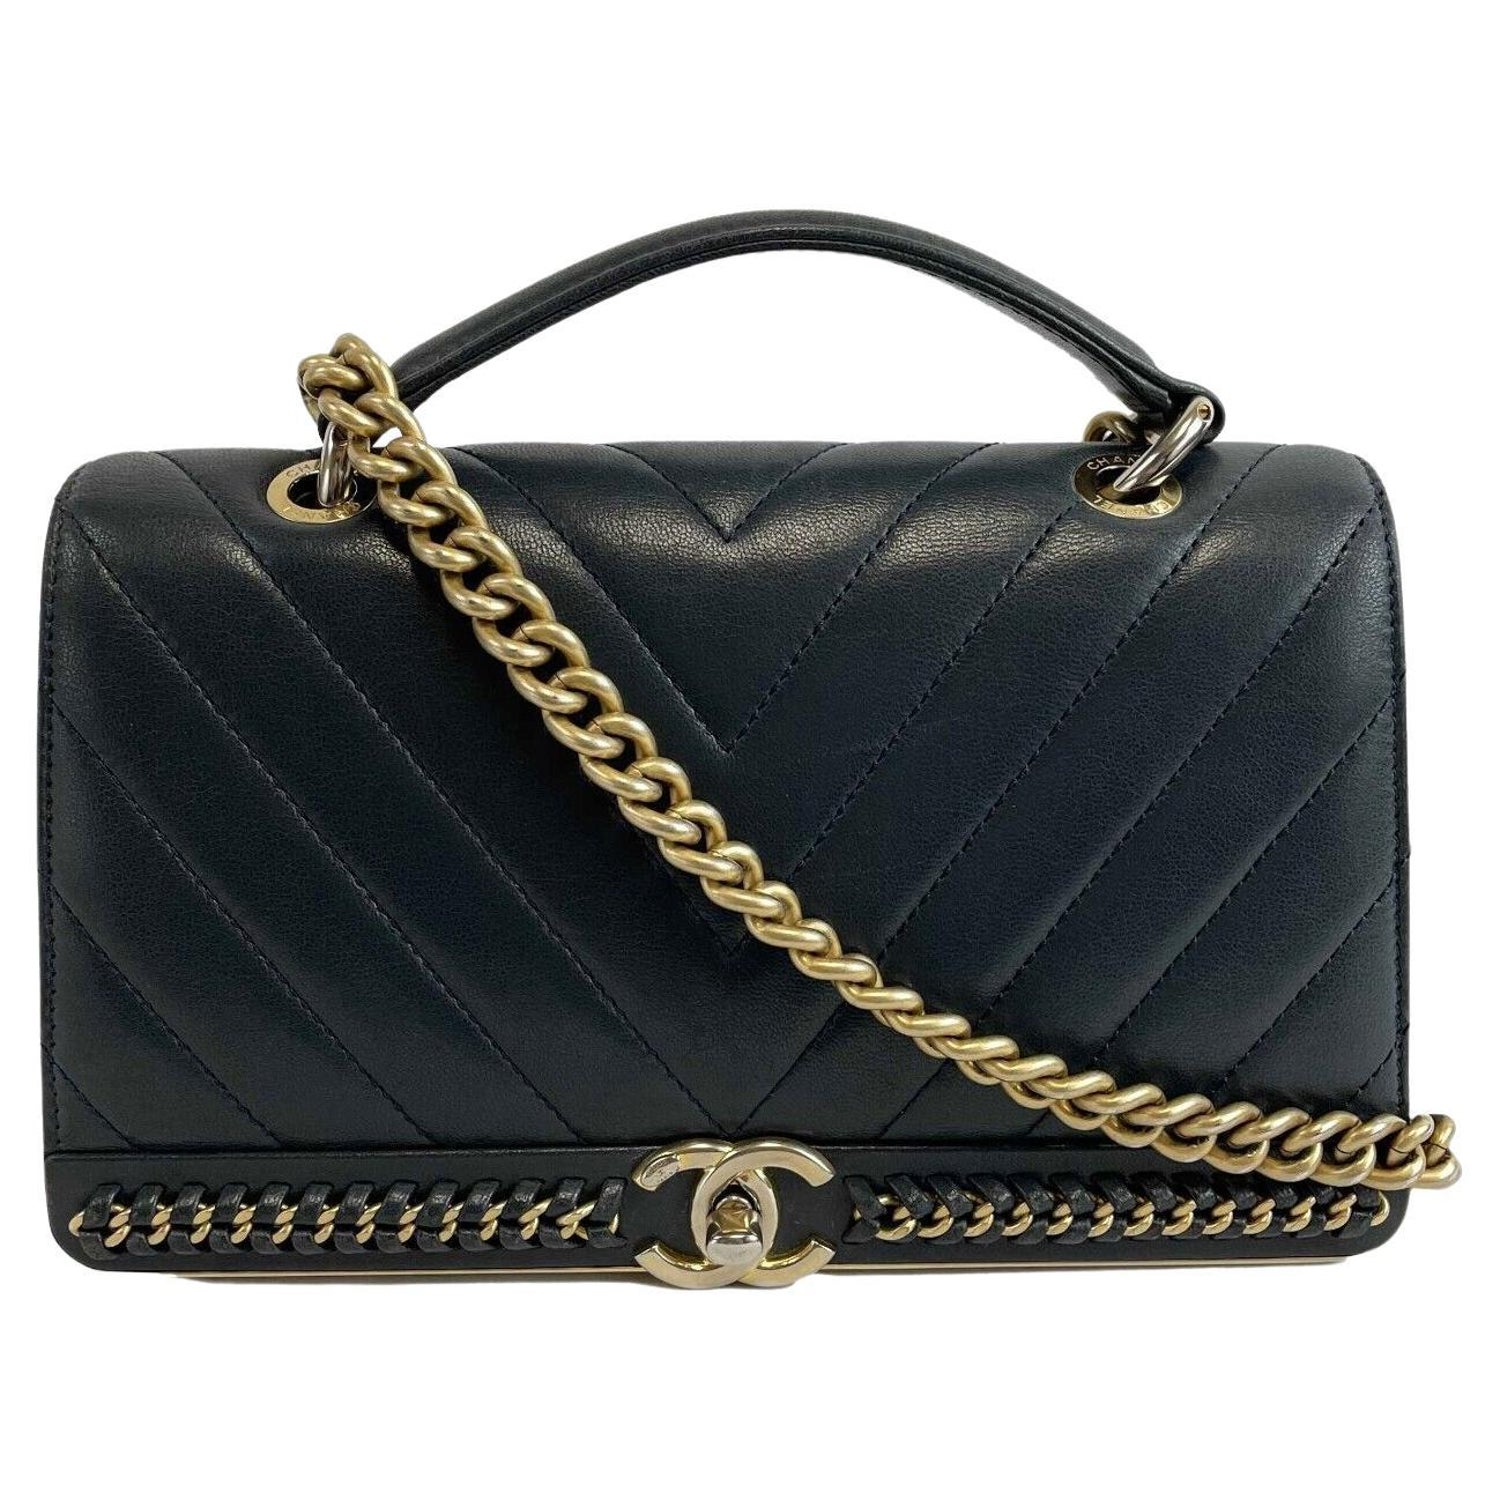 Louis Vuitton - Coussin MM - Black Leather Shoulder Bag w/ 2 Straps FULL  KIT